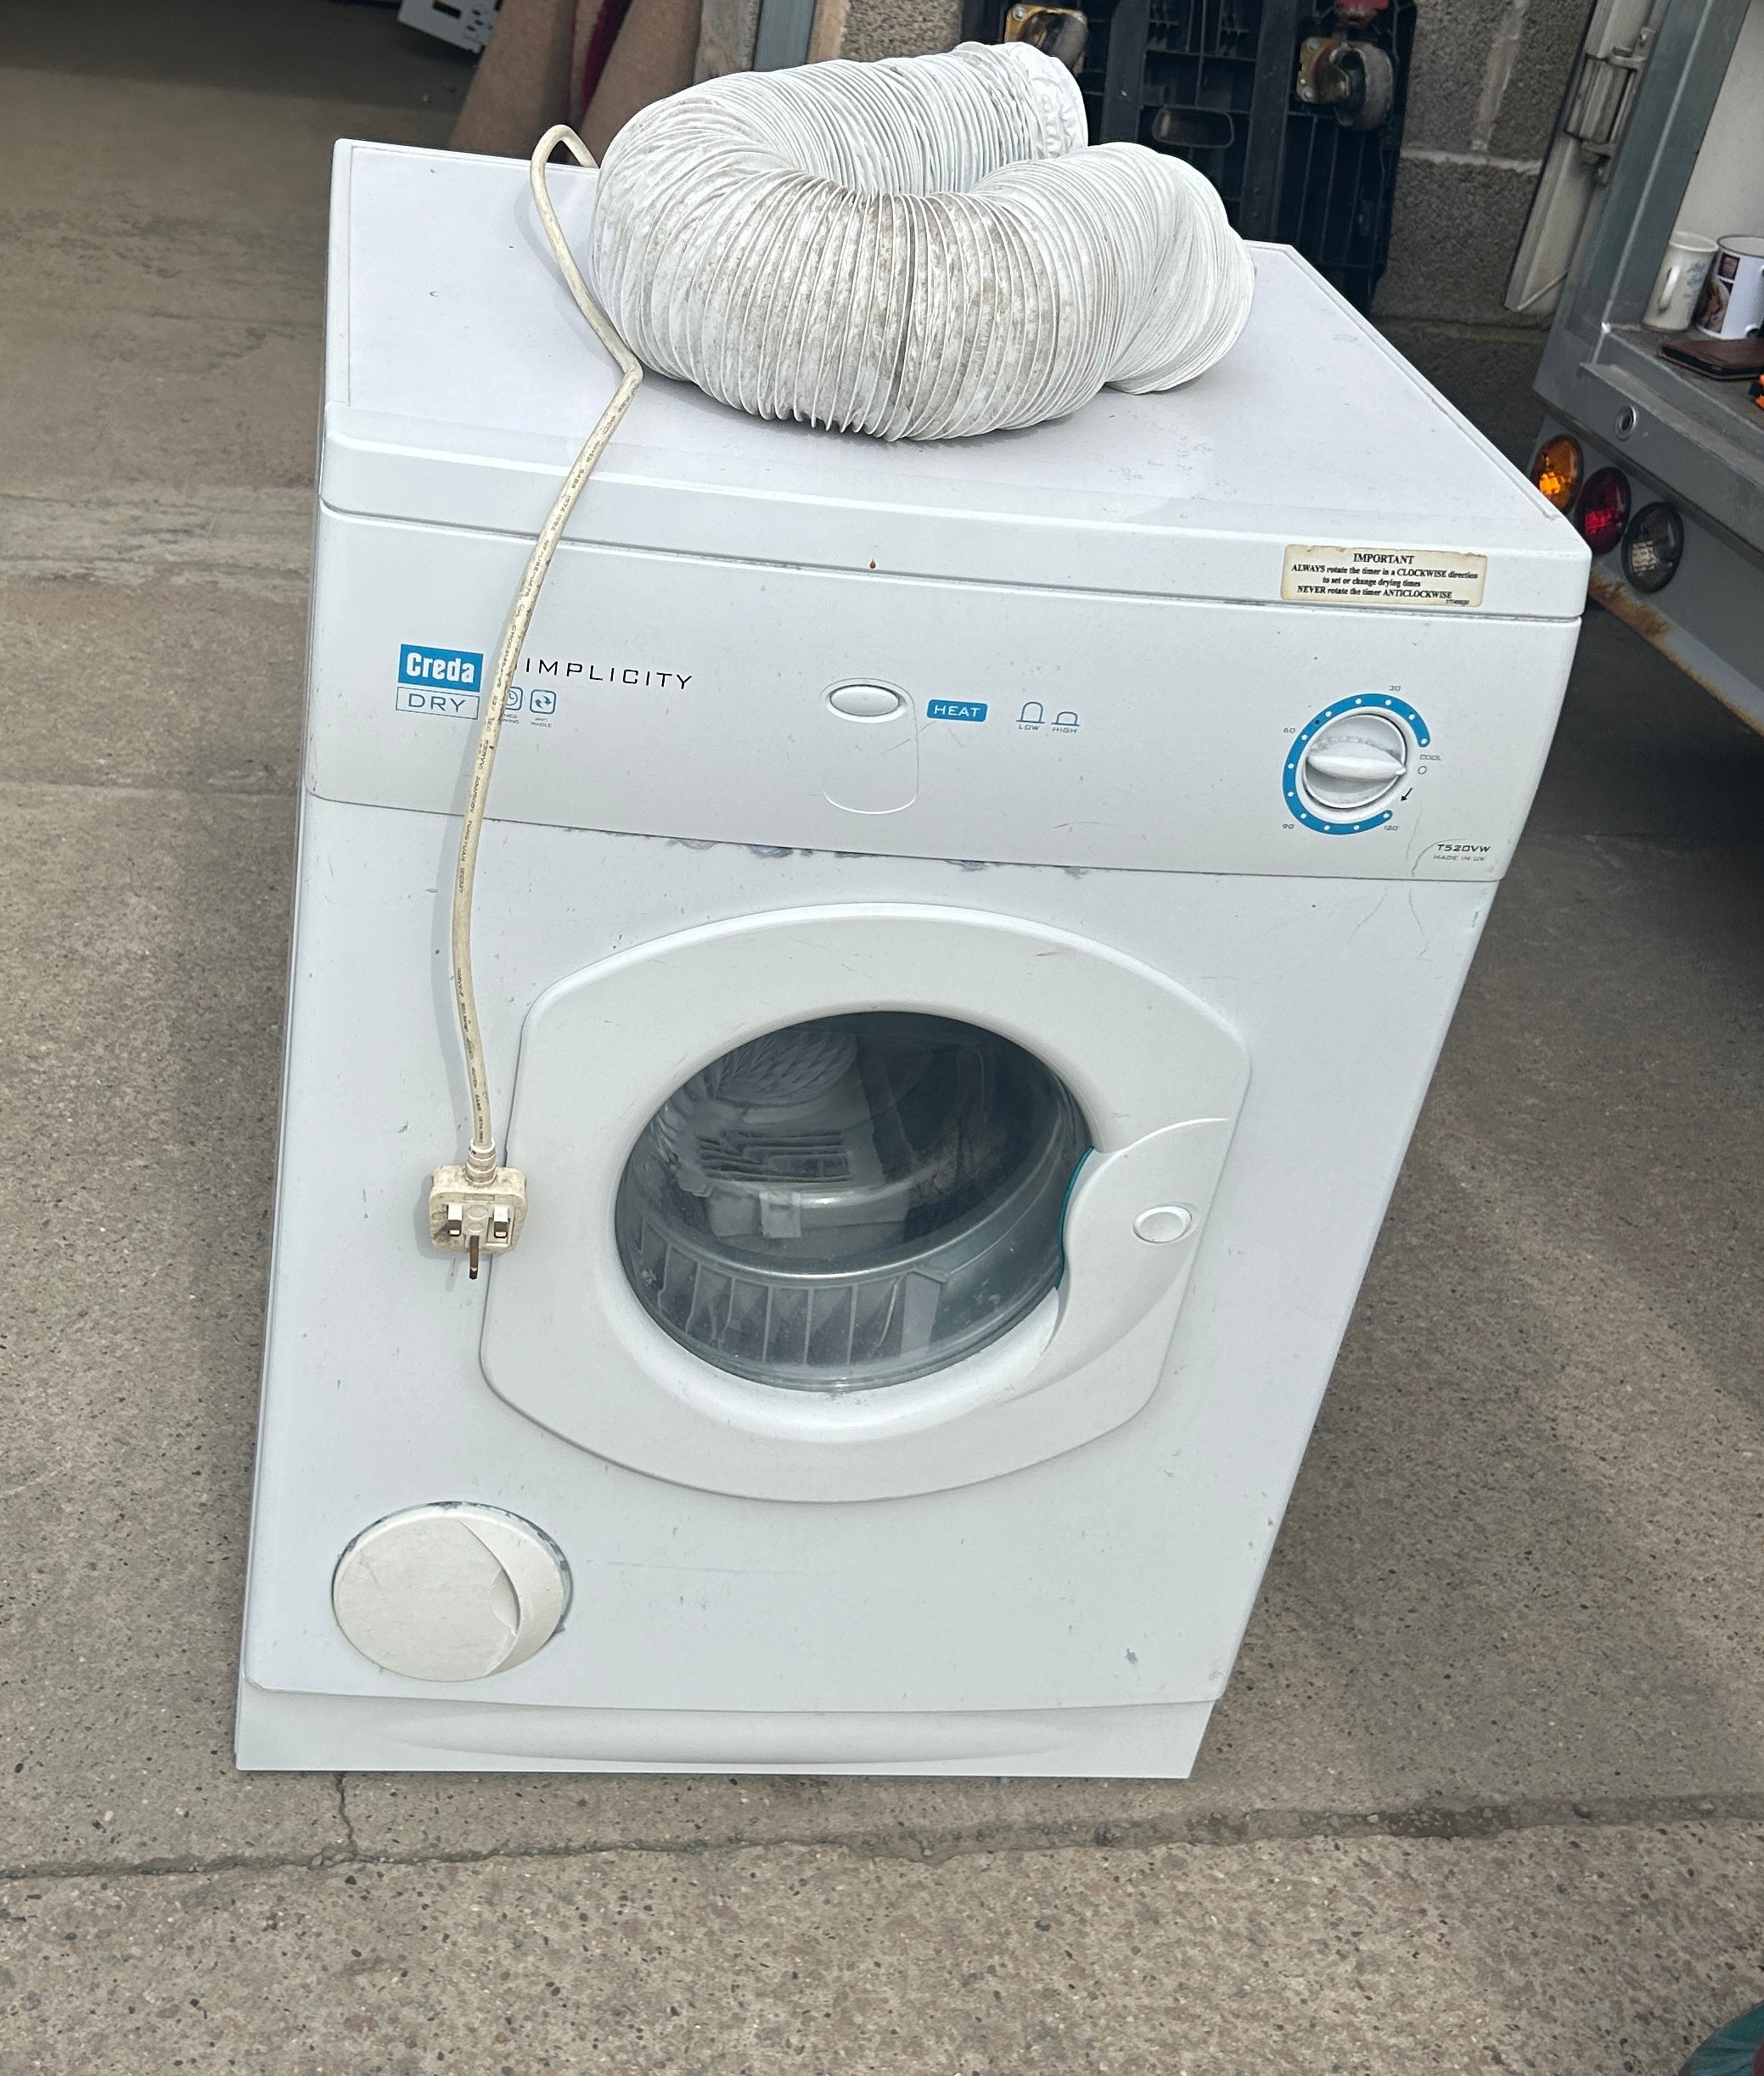 Creda dry tumble dryer in working order - Bild 2 aus 3